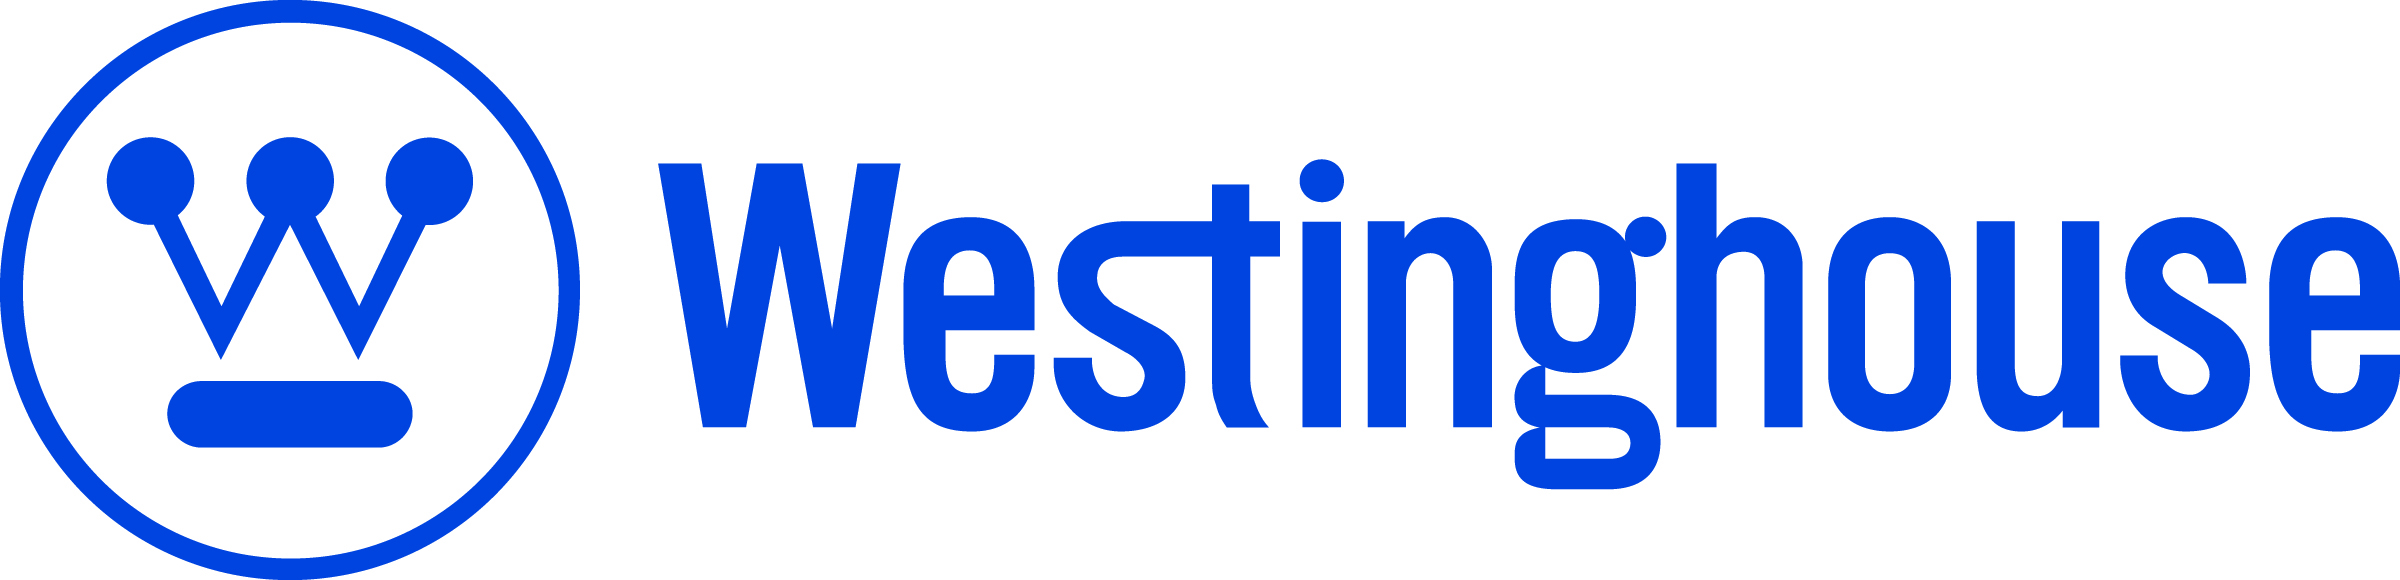 Westinghouse(co-sponsor)